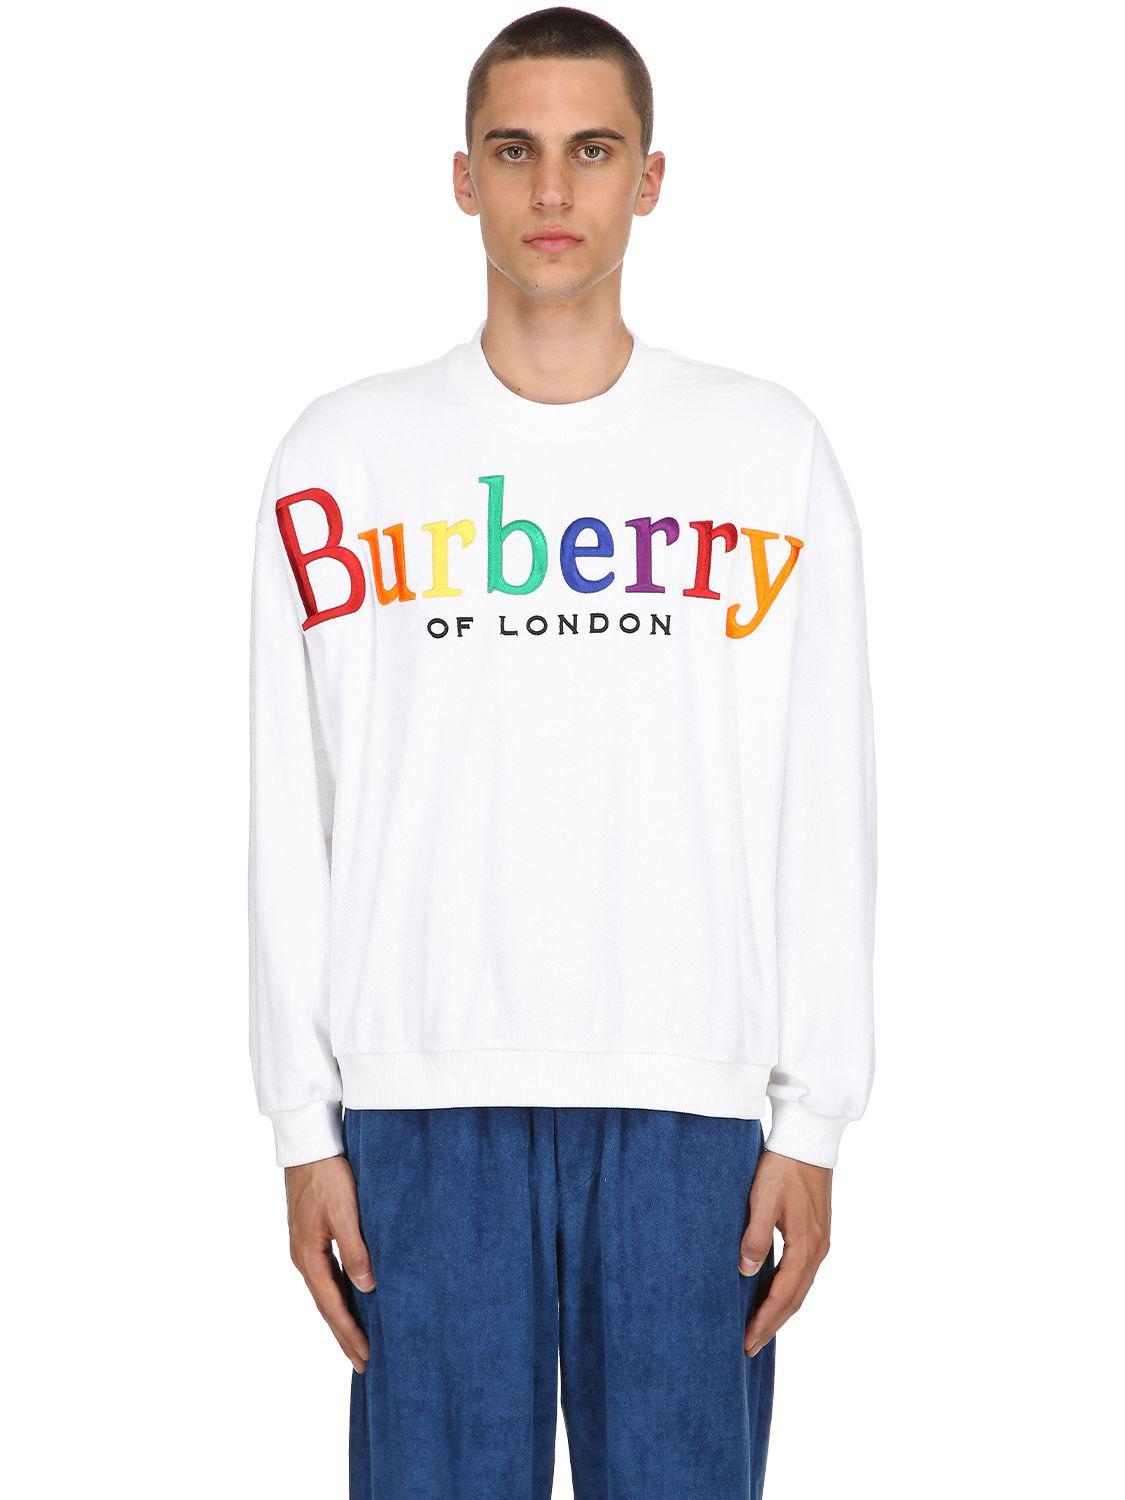 burberry rainbow logo sweatshirt